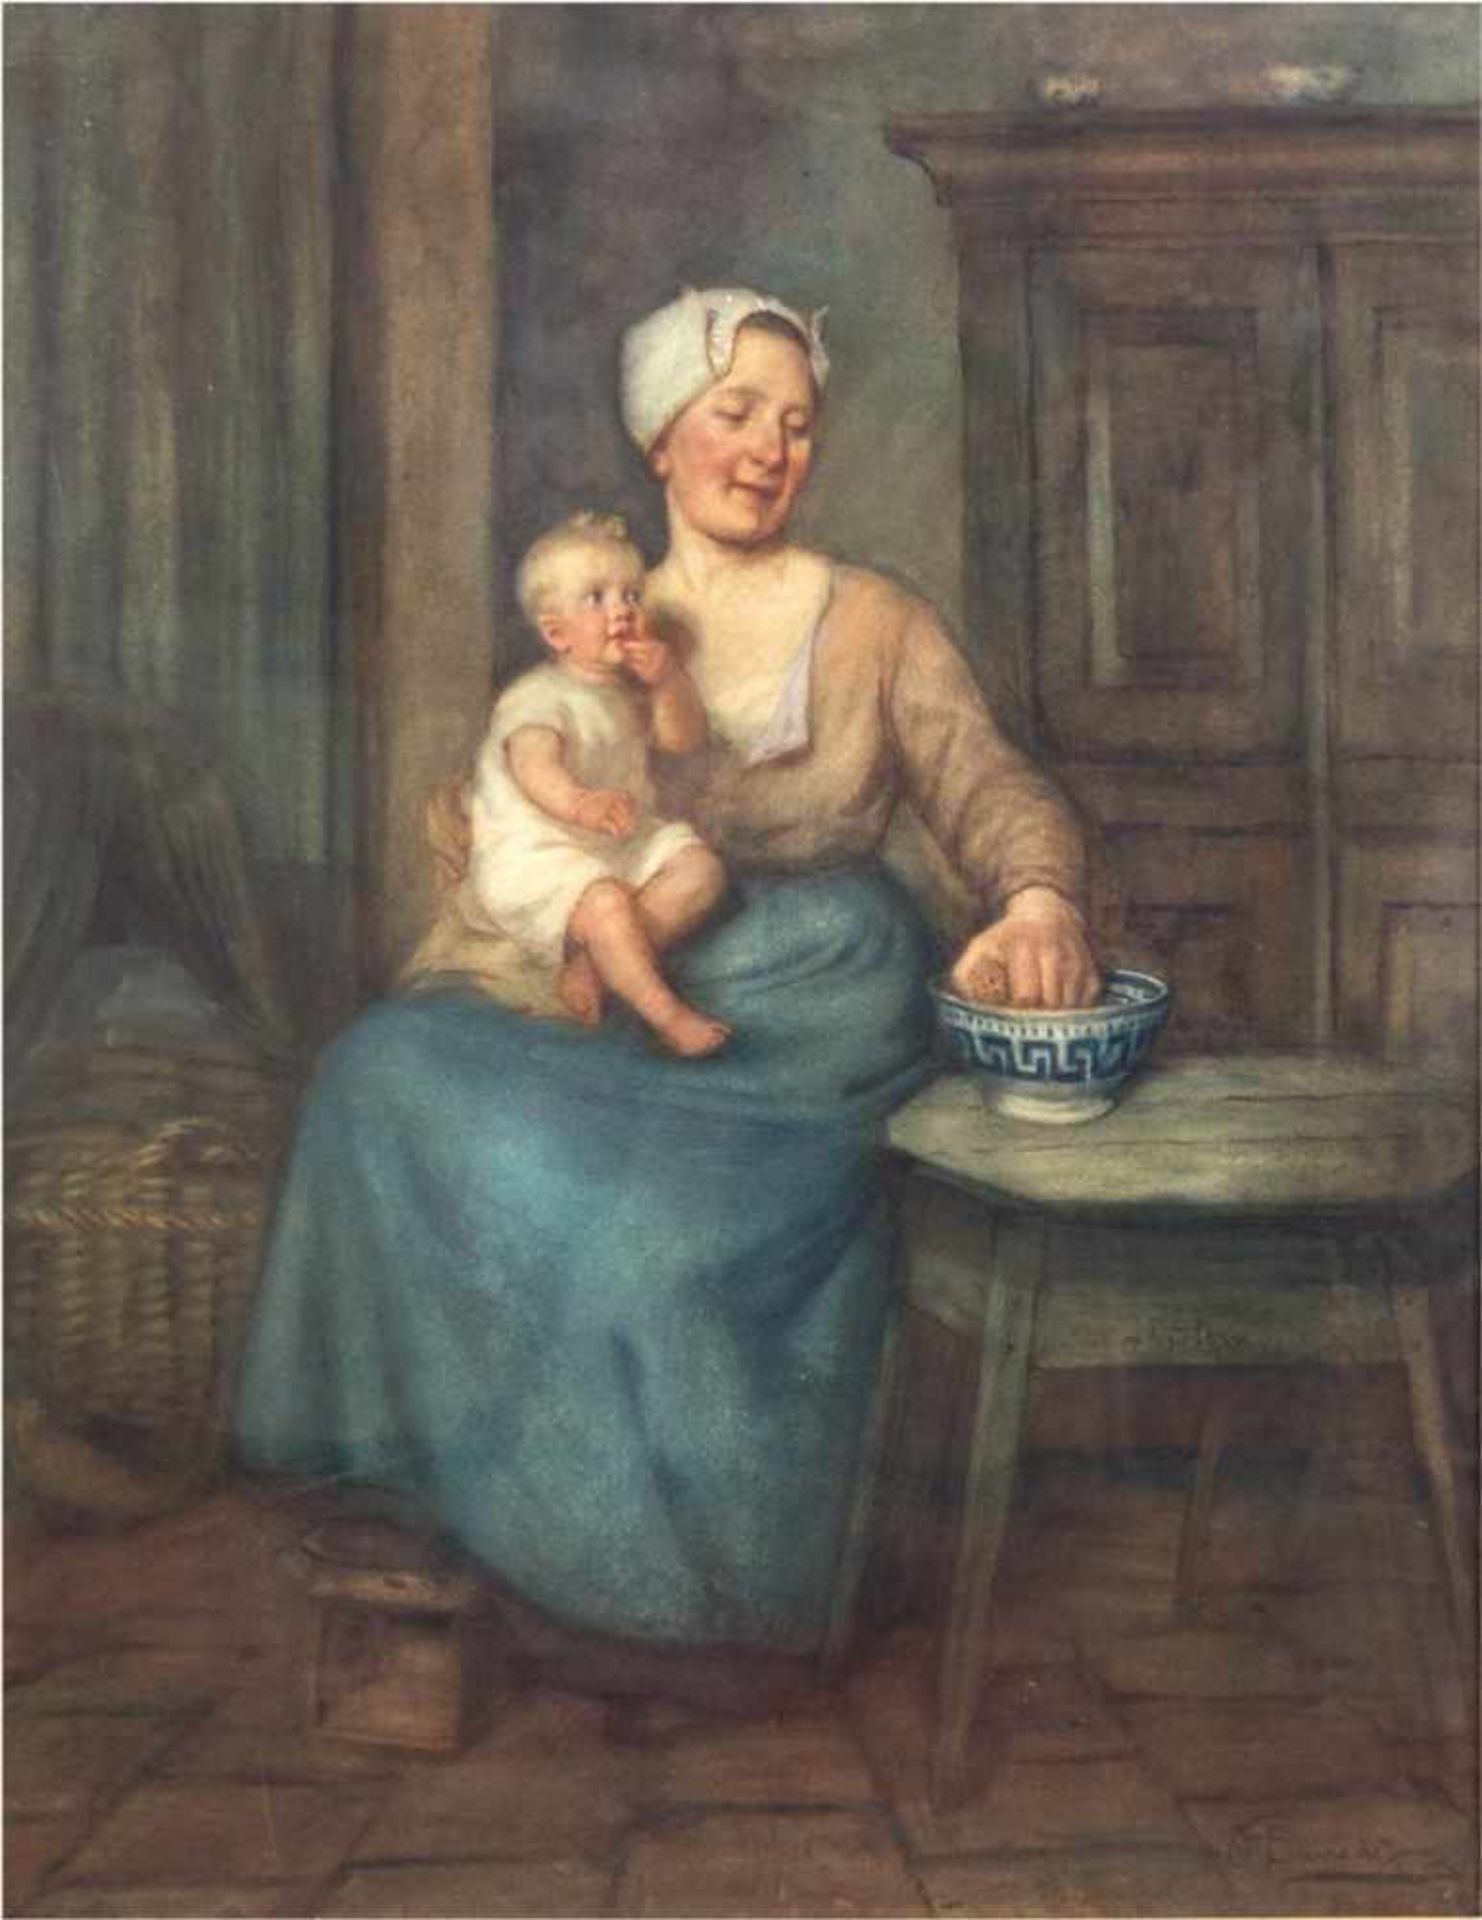 Sterre de Jong, Jacobus Frederik (1866-1920) "Mutter mit Kind", Pastell/HF., 66x49,5 cm,hinter Glas,